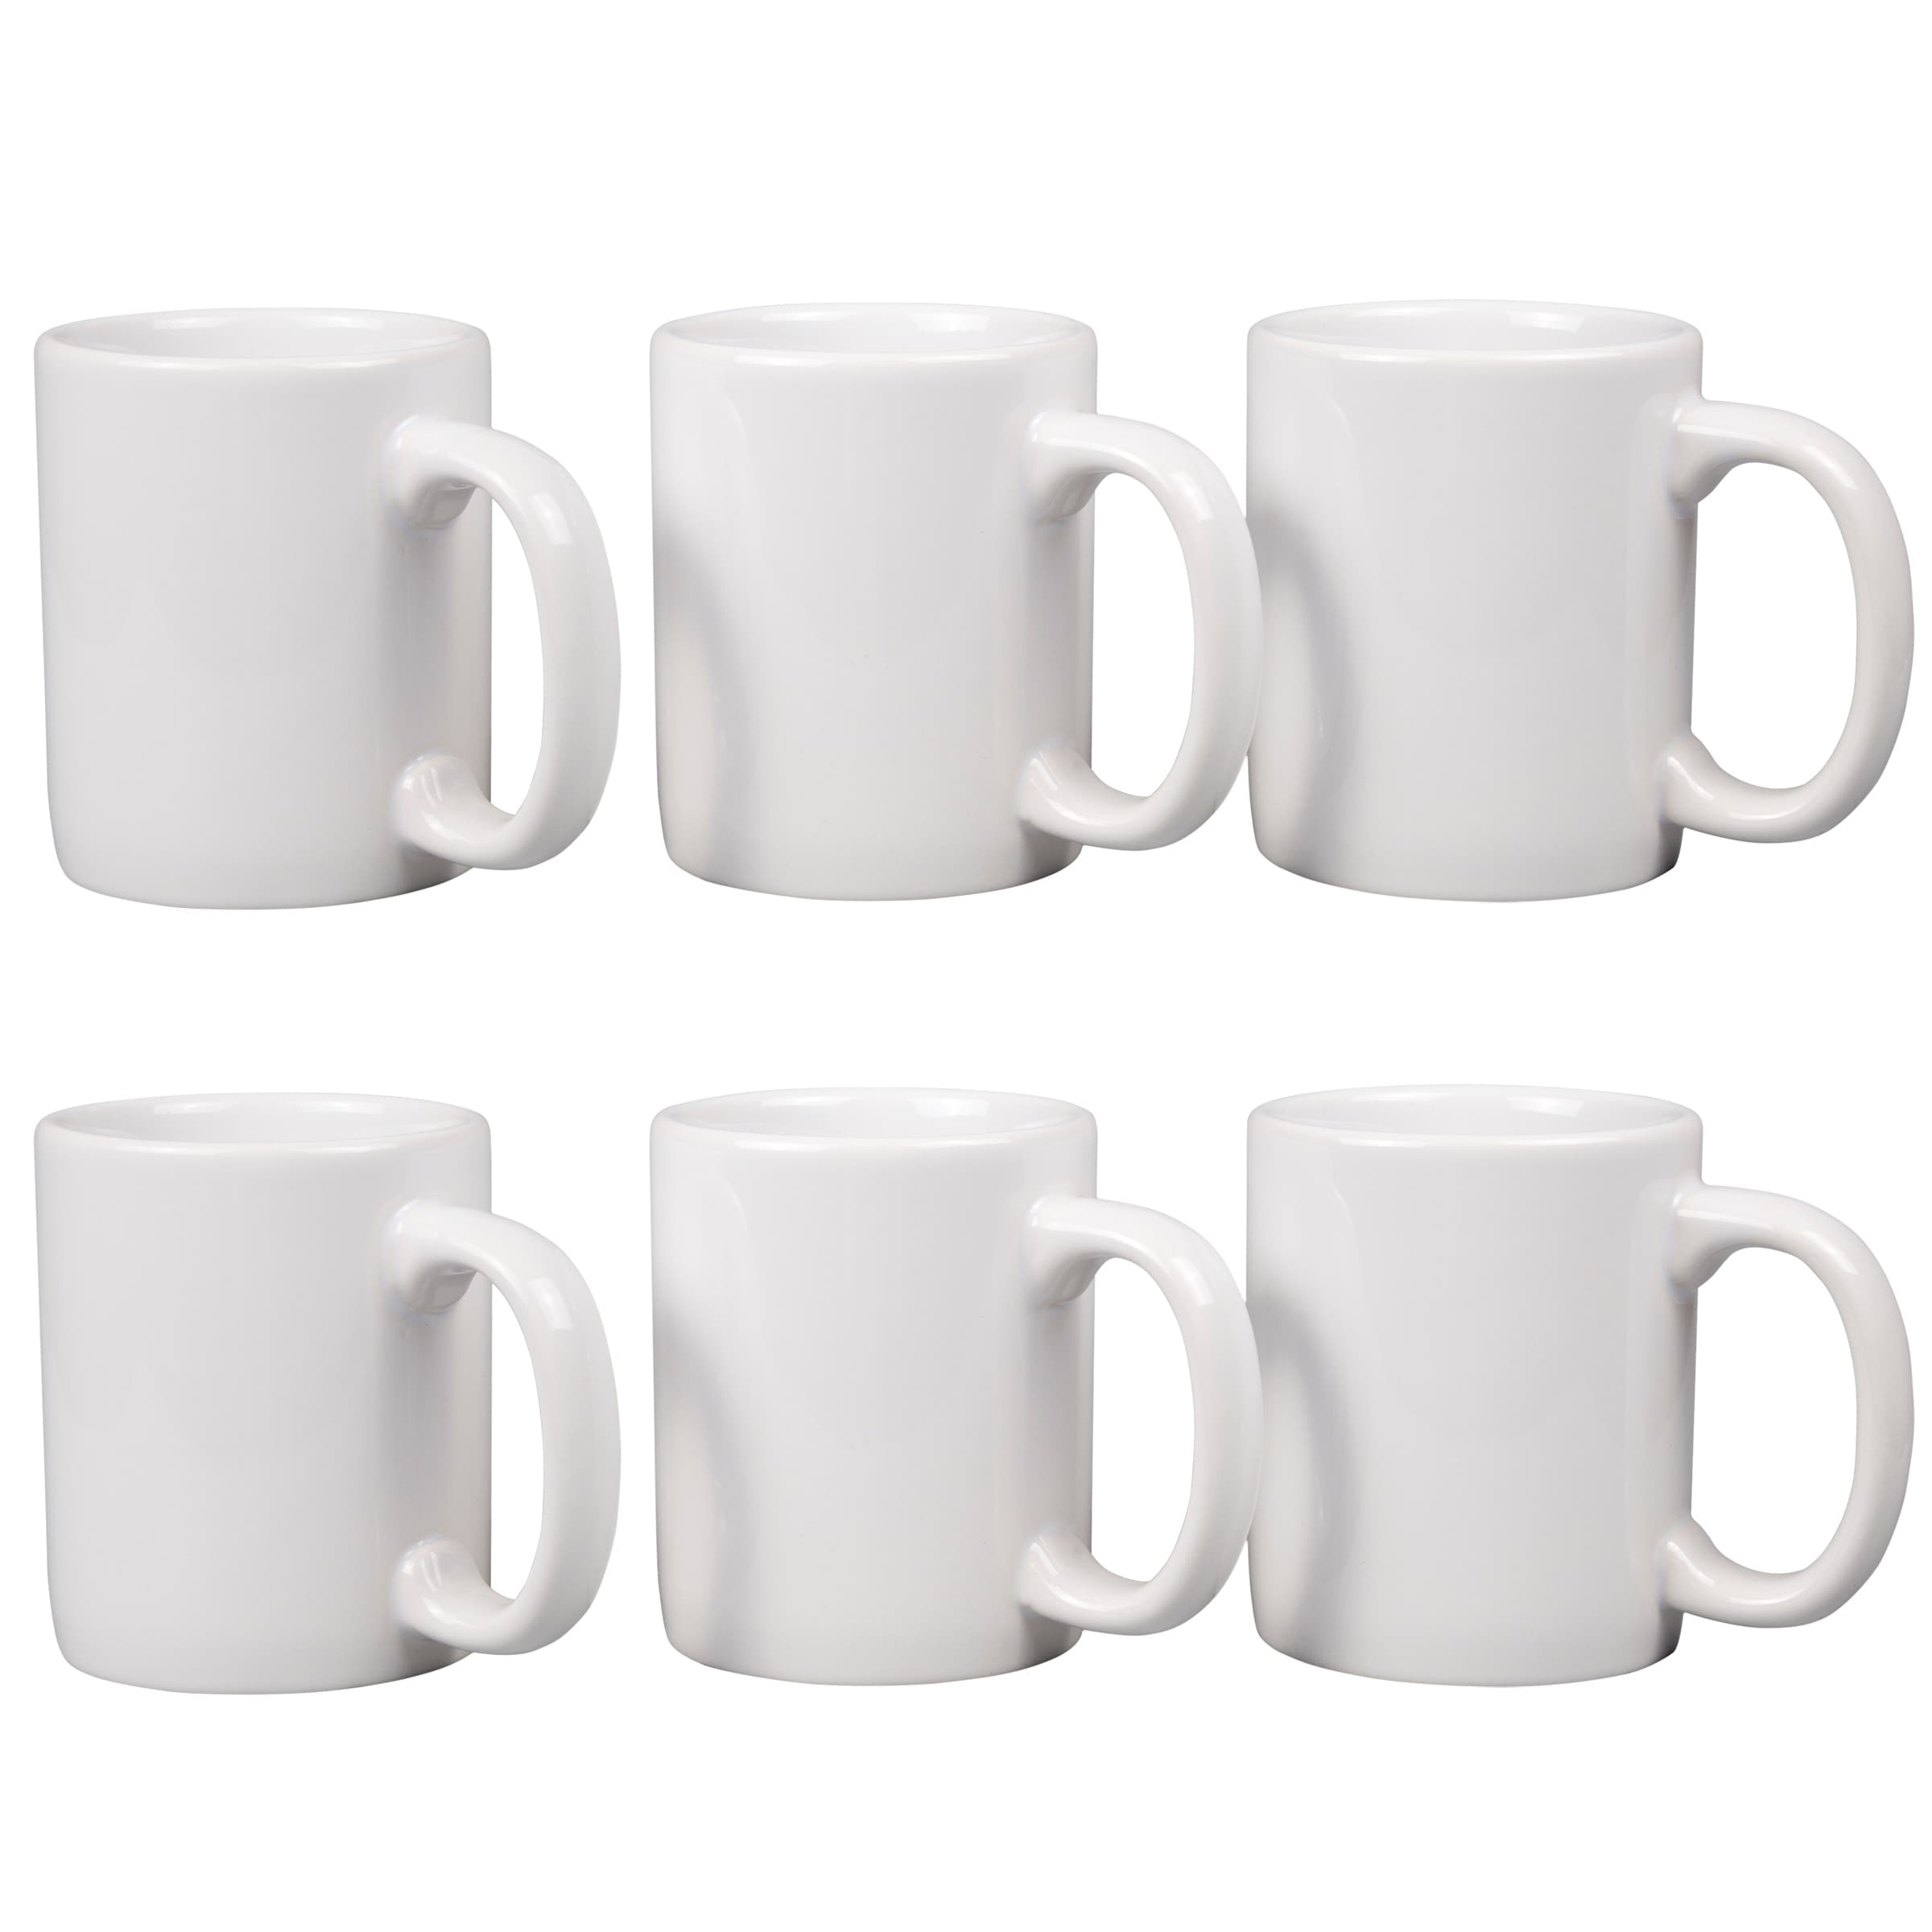 https://ak1.ostkcdn.com/images/products/is/images/direct/57db12a1b9a642a5bd305ce963bd25d12d2c31b9/Creative-Home-Set-of-6-Piece%2C-12-oz-Ceramic-Coffee-Mug-Tea-Cup%2C-3-1-4%22-D-X-4%22-H%2C-White.jpg